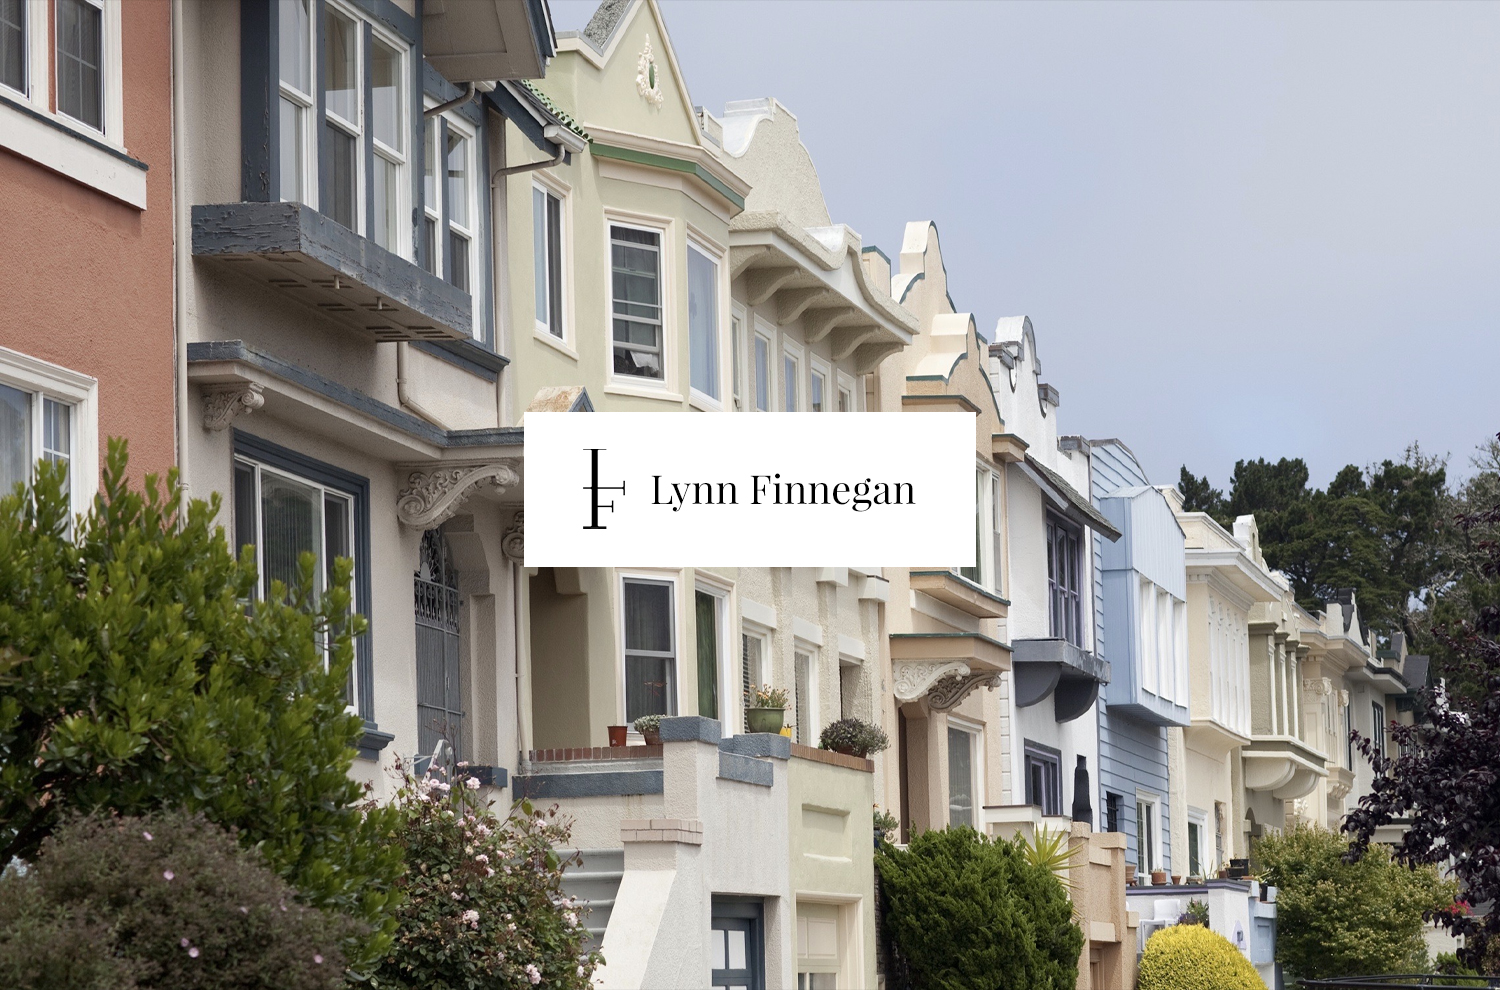 A row of homes on real estate agent,Lynn Finnegan's website 